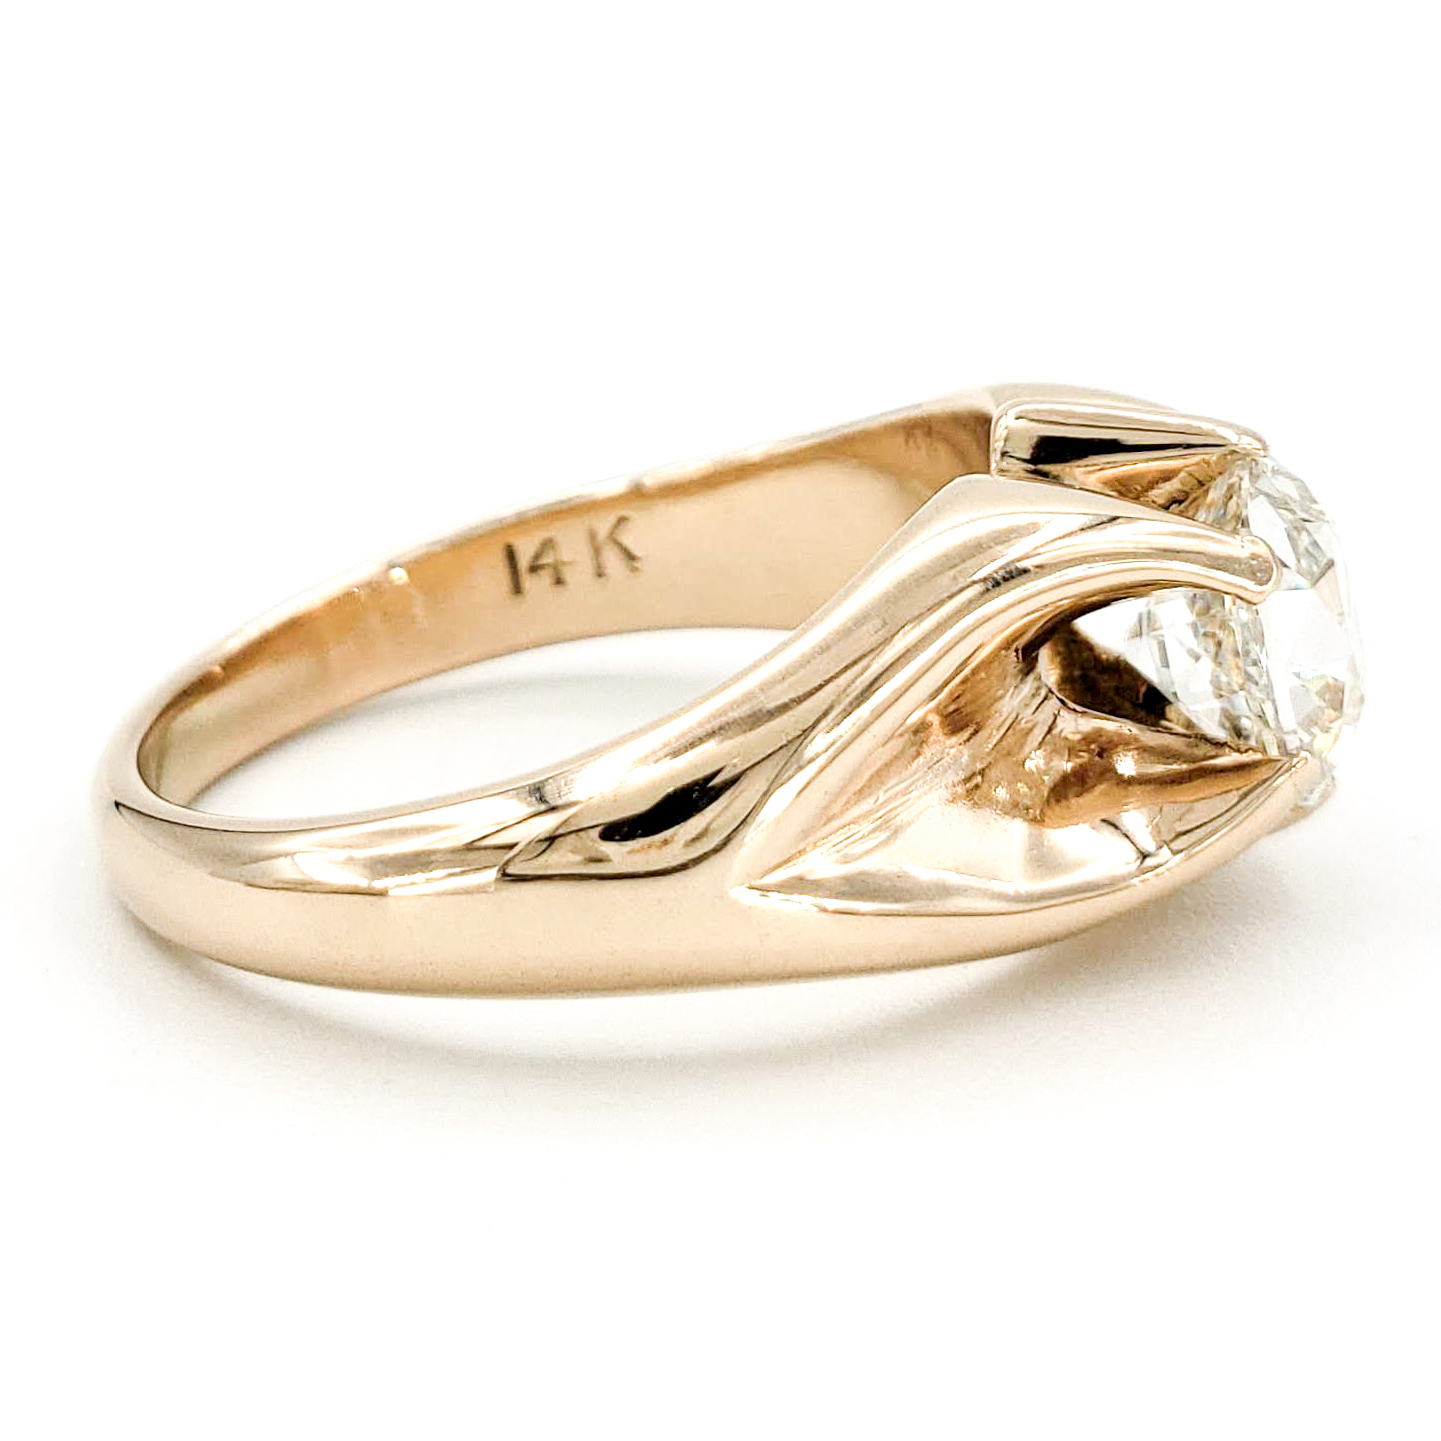 vintage-14-karat-gold-engagement-ring-with-1-13-carat-old-mine-cut-diamond-egl-g-si2